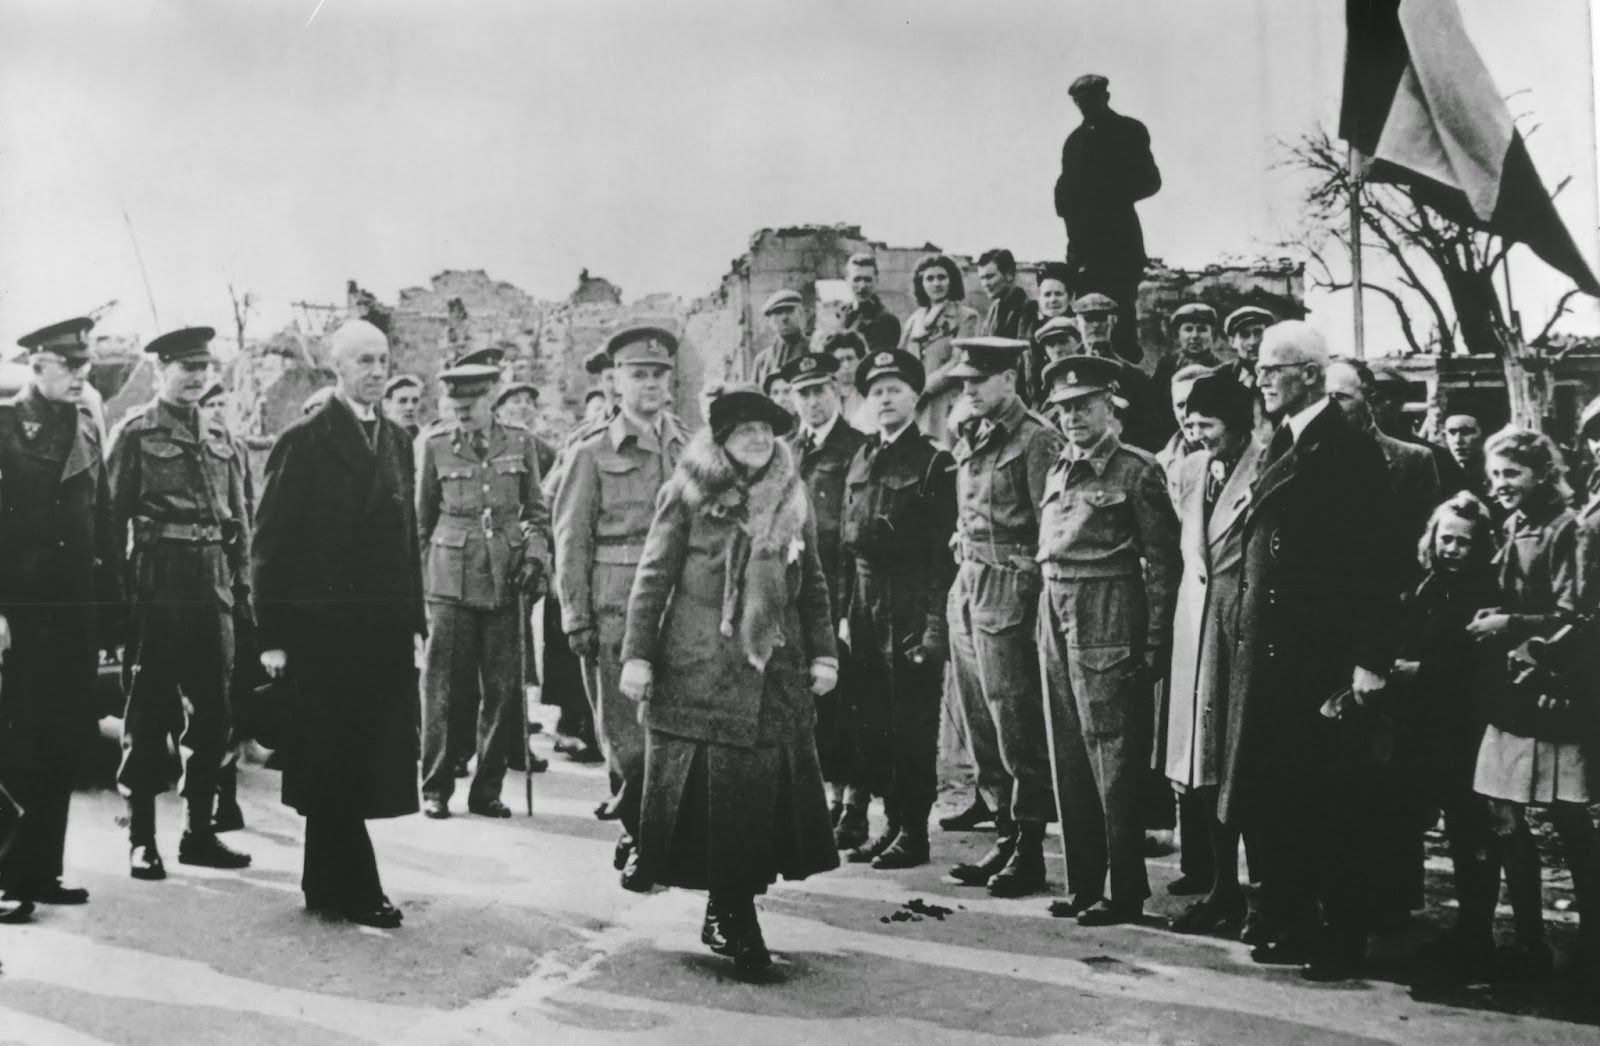 Queen Wilhelmina arriving in Zeeland and is welcomed by Governor Quarles van Ufford 1945